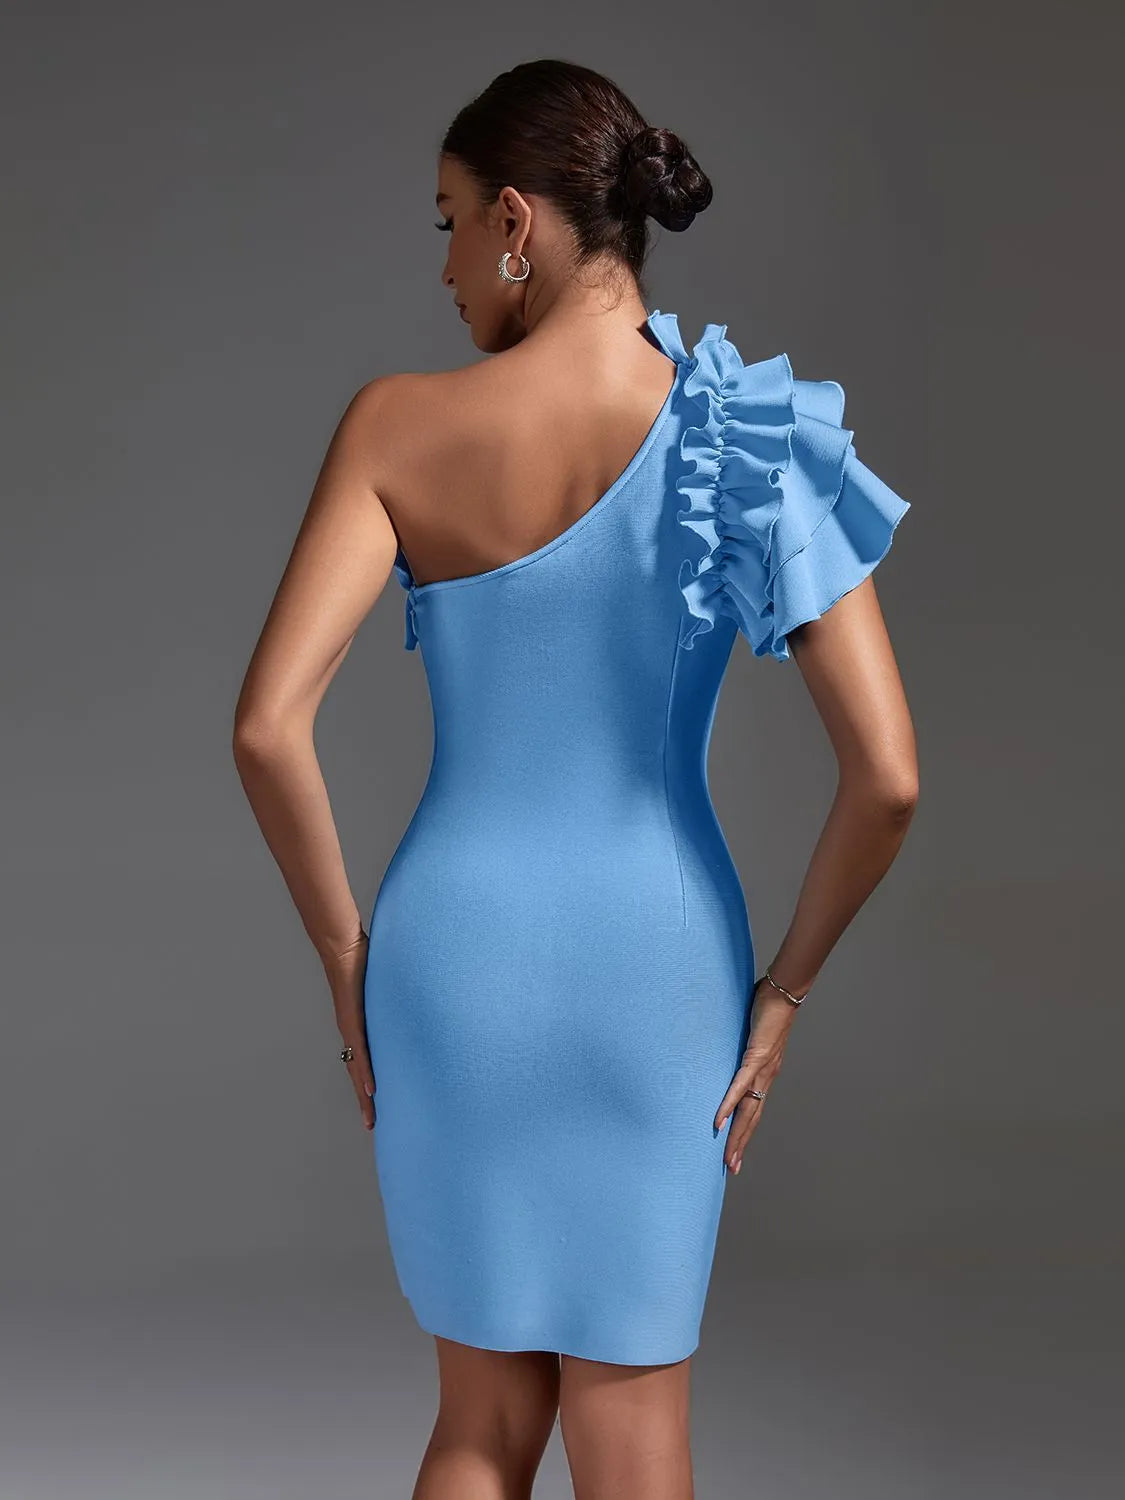 Bodycon Blue Bandage Dress Women Elegant Party Dress Ruffle One Shoulder Sexy Evening Birthday Club Outfits